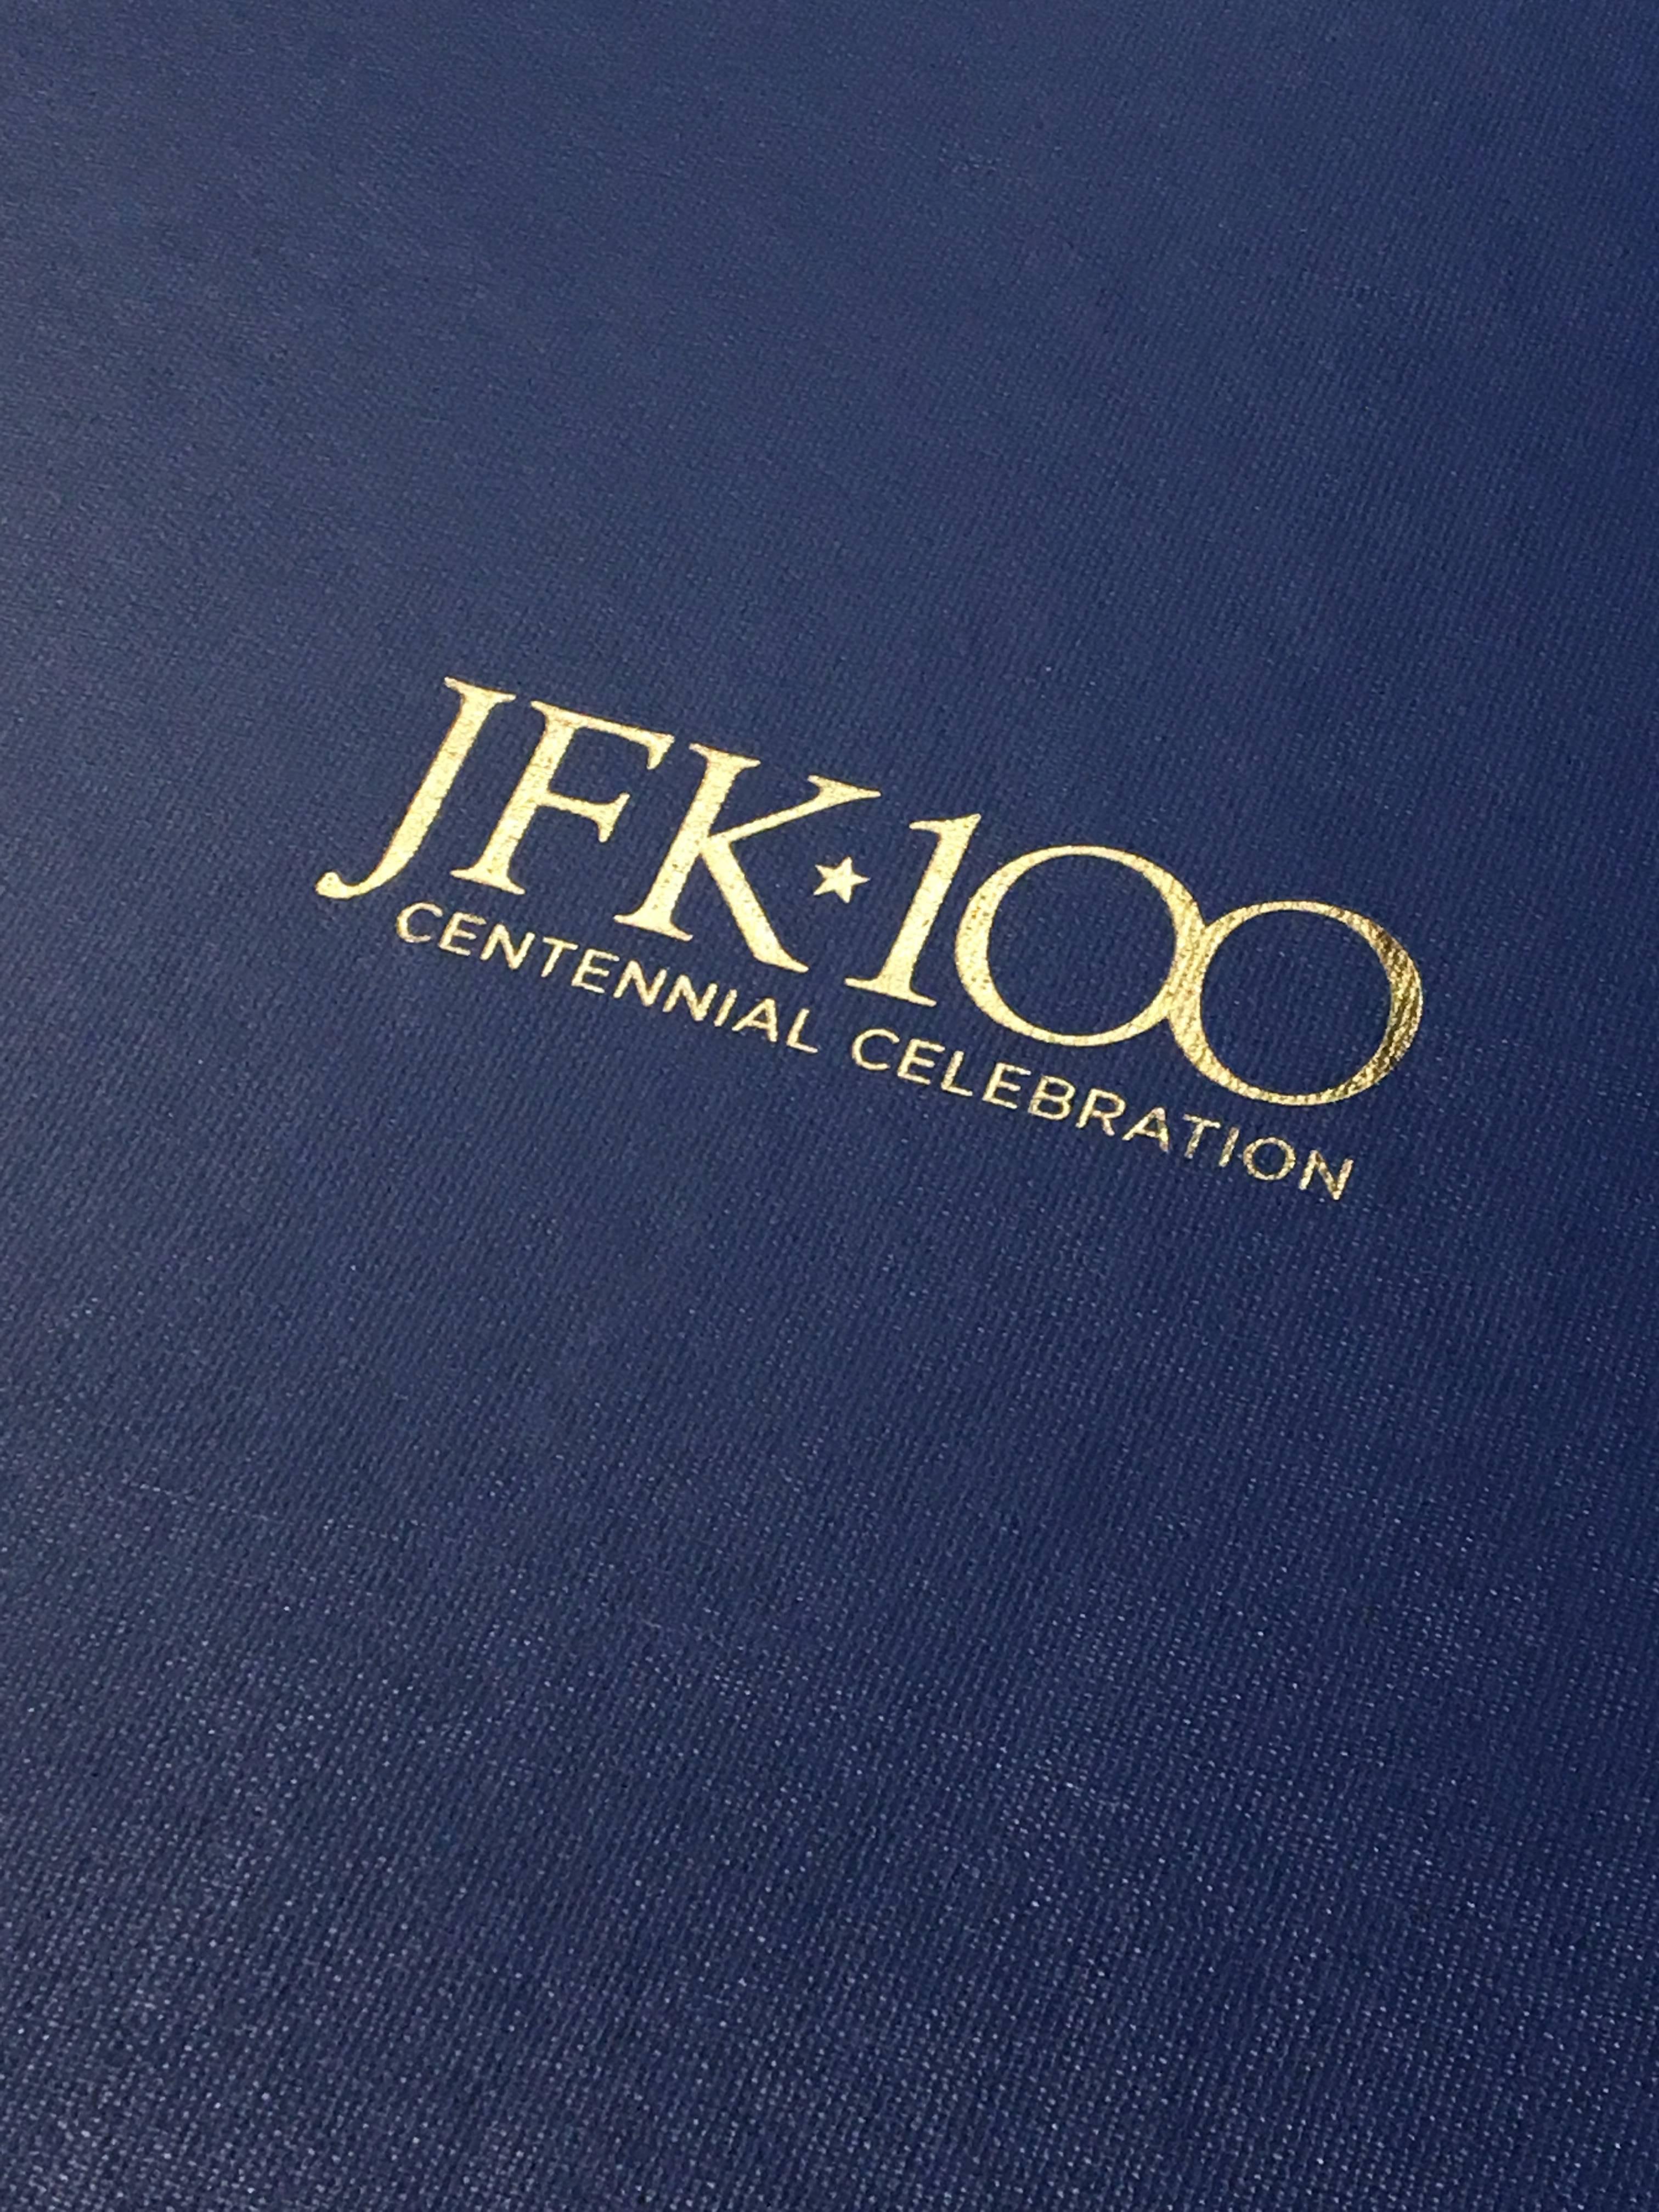 JFK 100 - Centennial Celebration Box Set - Photograph by Unknown